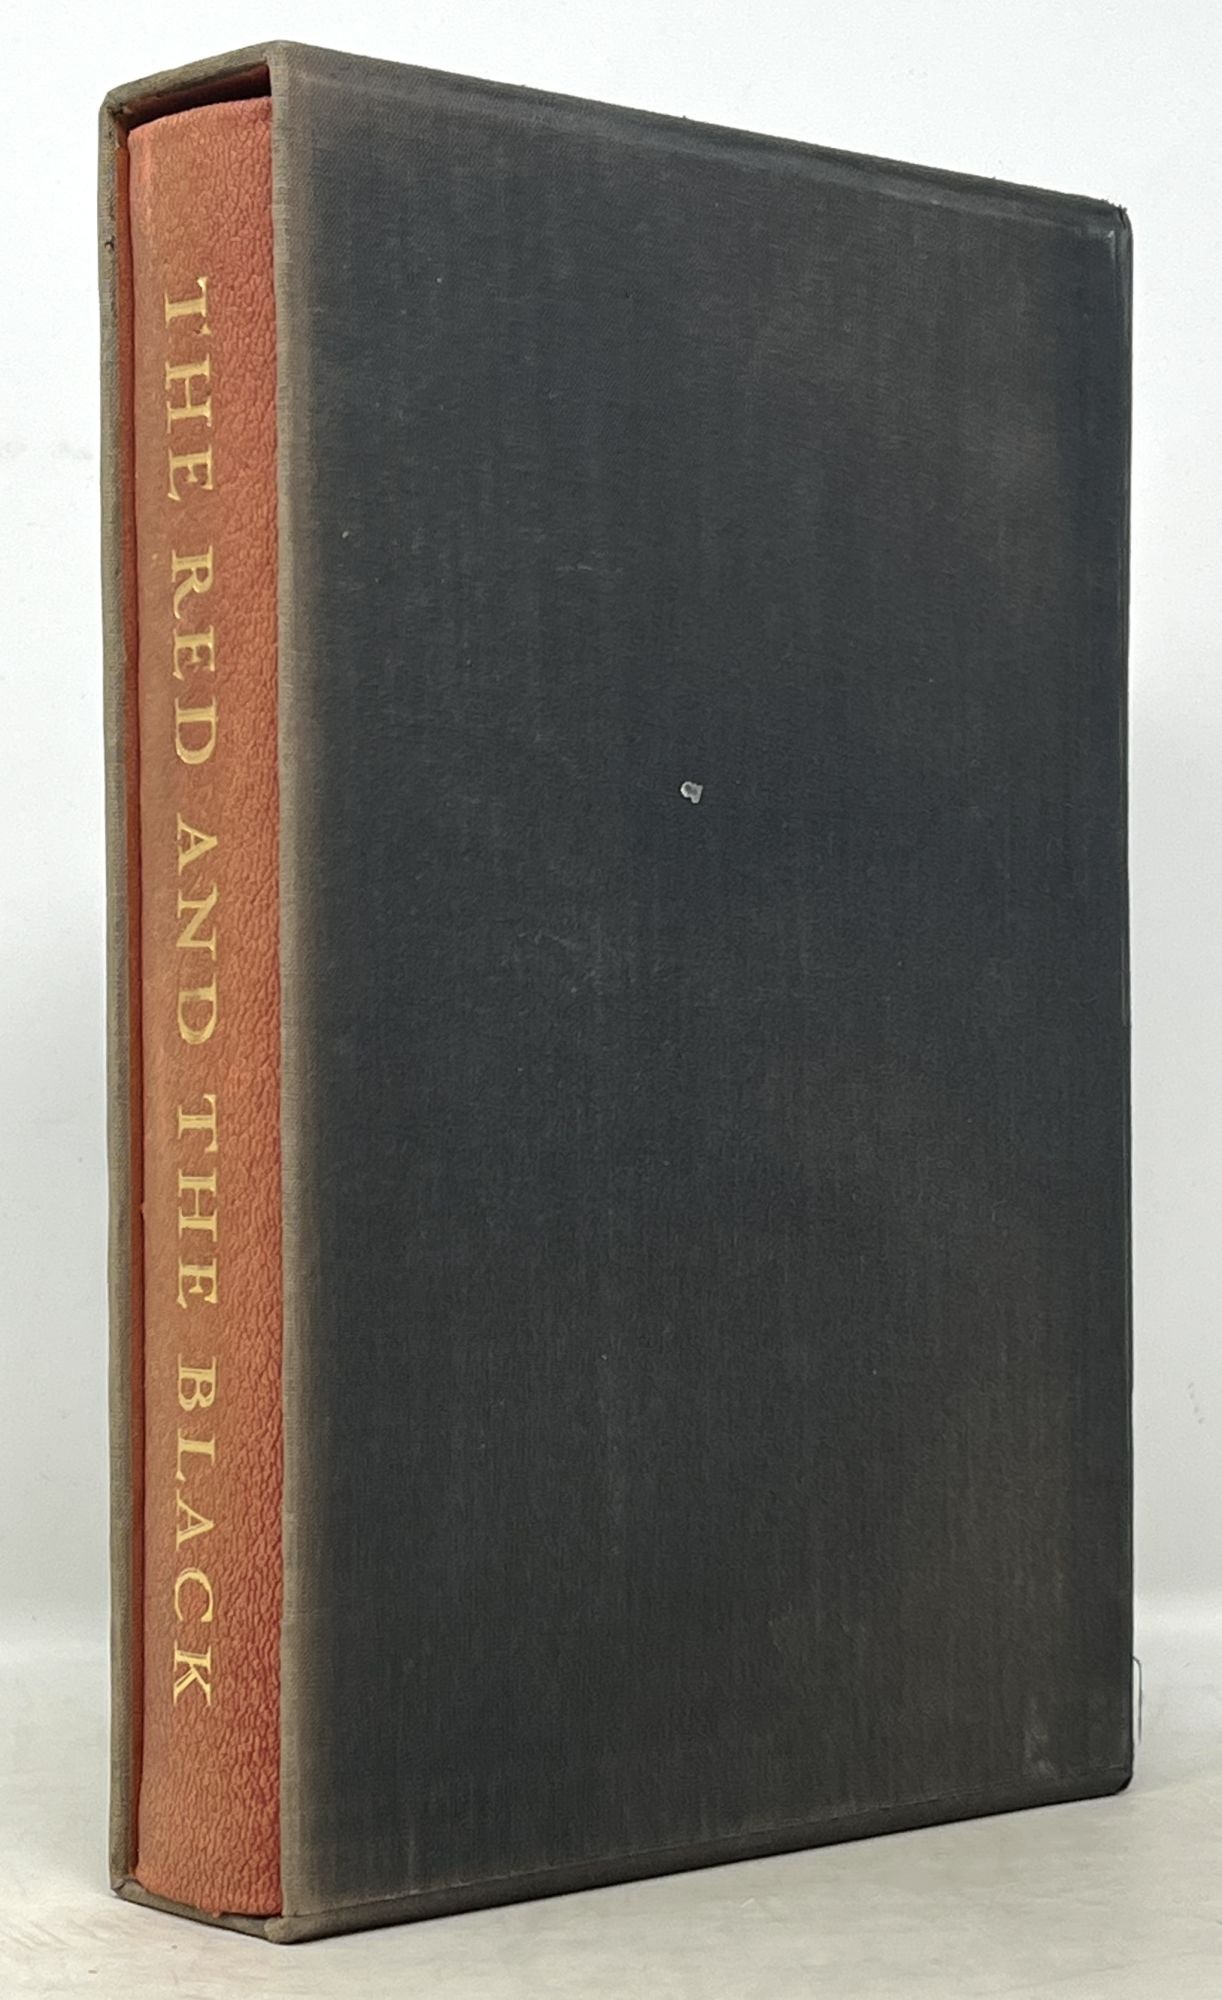 Beyle, Marie-Henri (Stemdhal [1783 - 1842]). Scott-Moncrieff, C. K. - Translator. Basso, Hamilton - Contributor - The RED And The BLACK.; Translated by C. K. Scott-Moncrieff. Introduction by Hamilton Basso